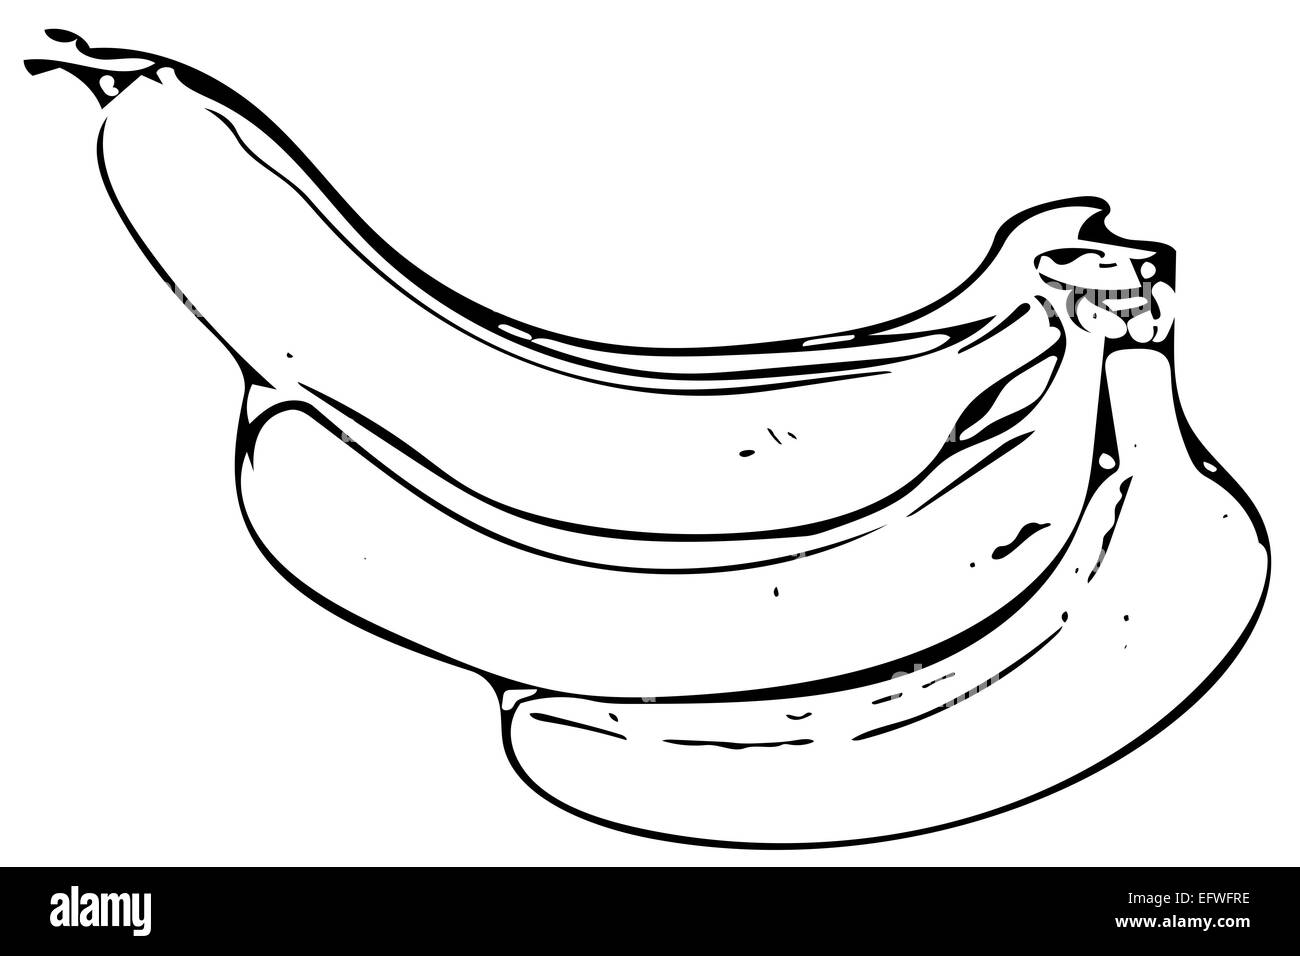 Banana bunch illustration Stock Photo